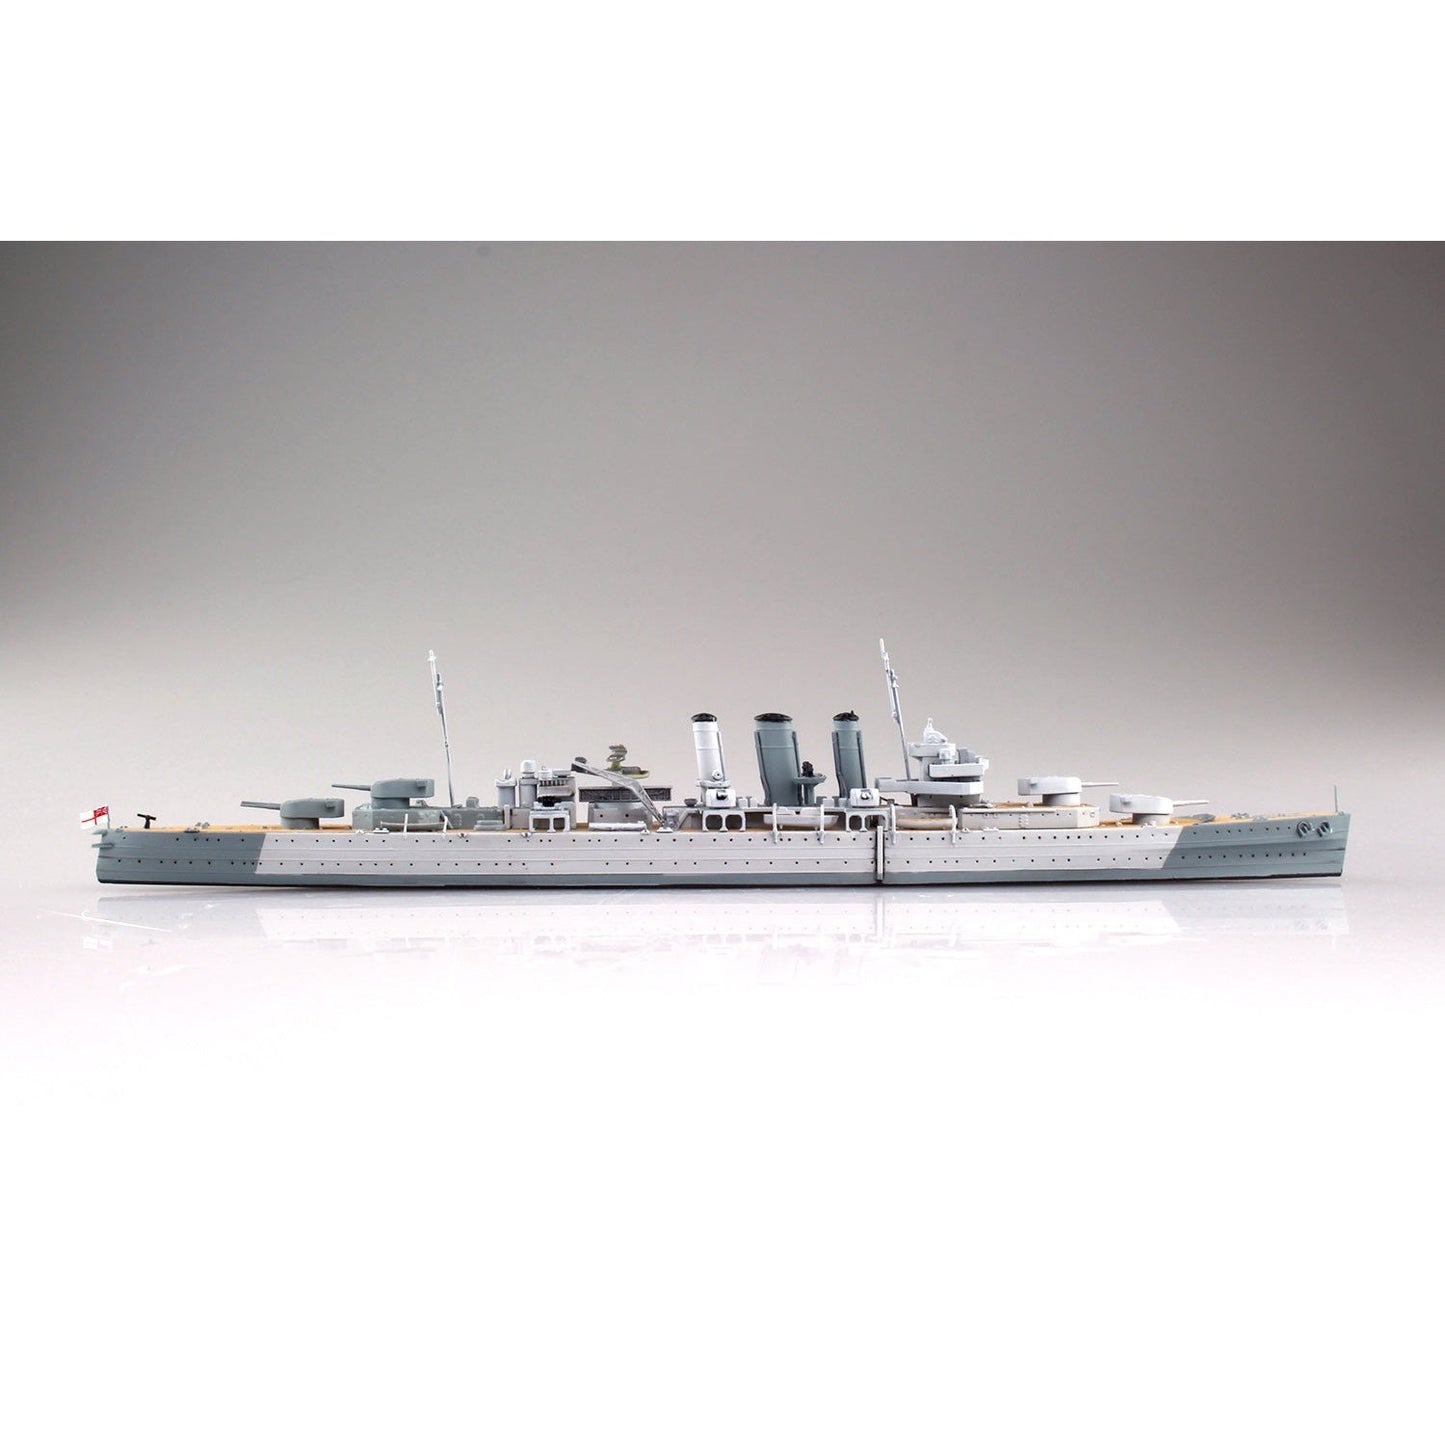 Aoshima 1/700 WL 325 British Heavy Cruiser Dorsetshire Plastic Model Kit